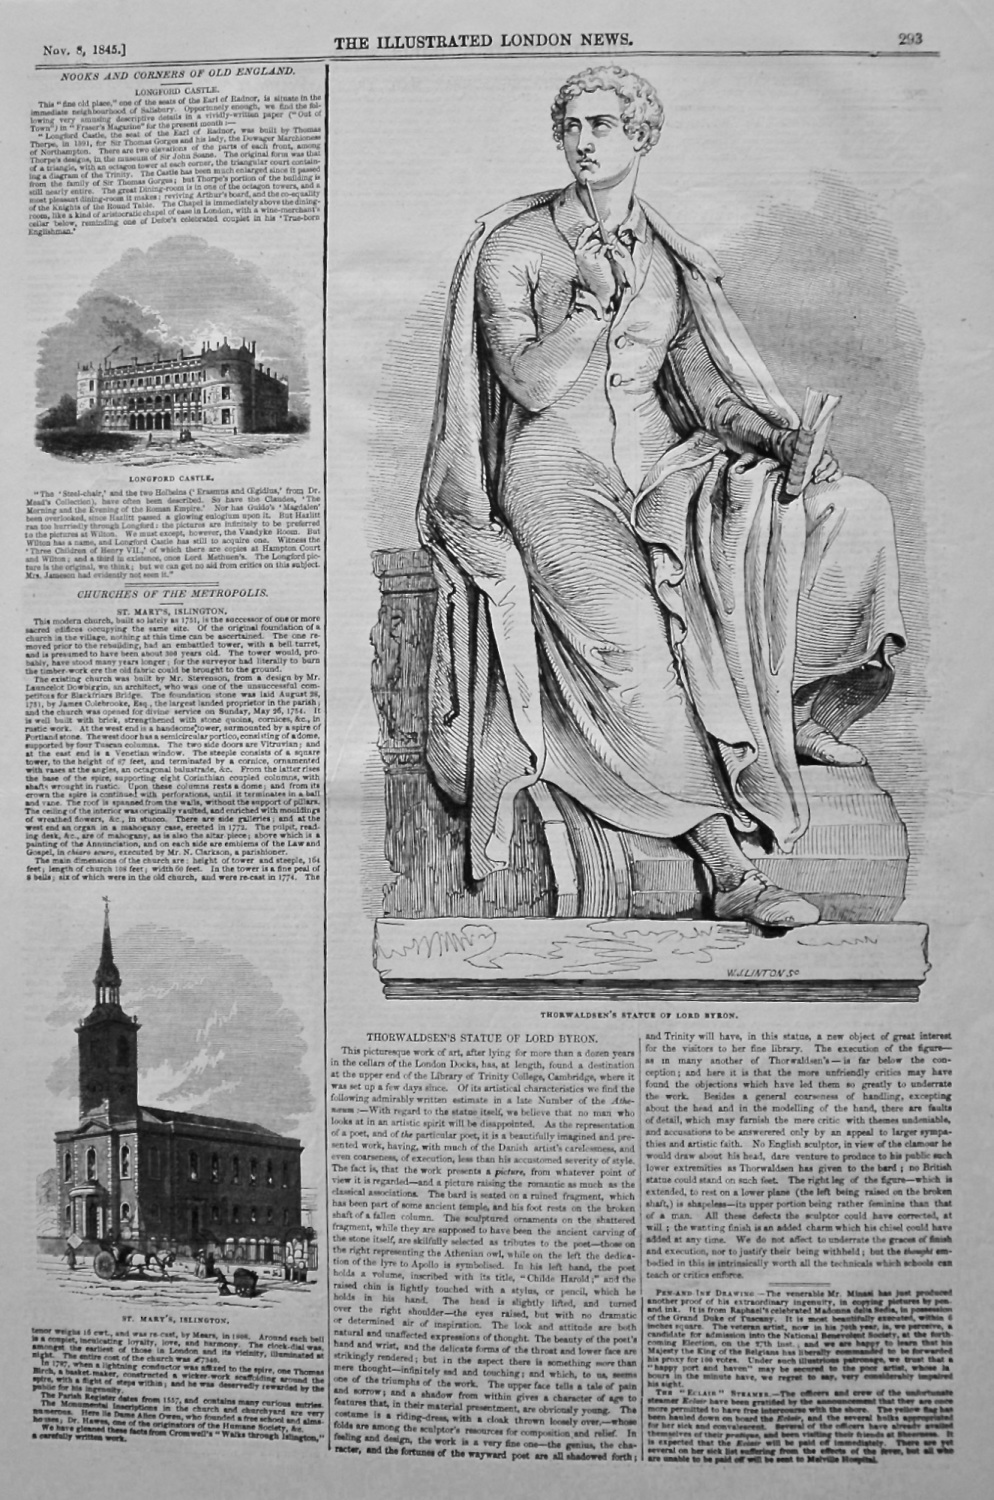 Thorwaldsen's Statue of Lord Byron. 1845.